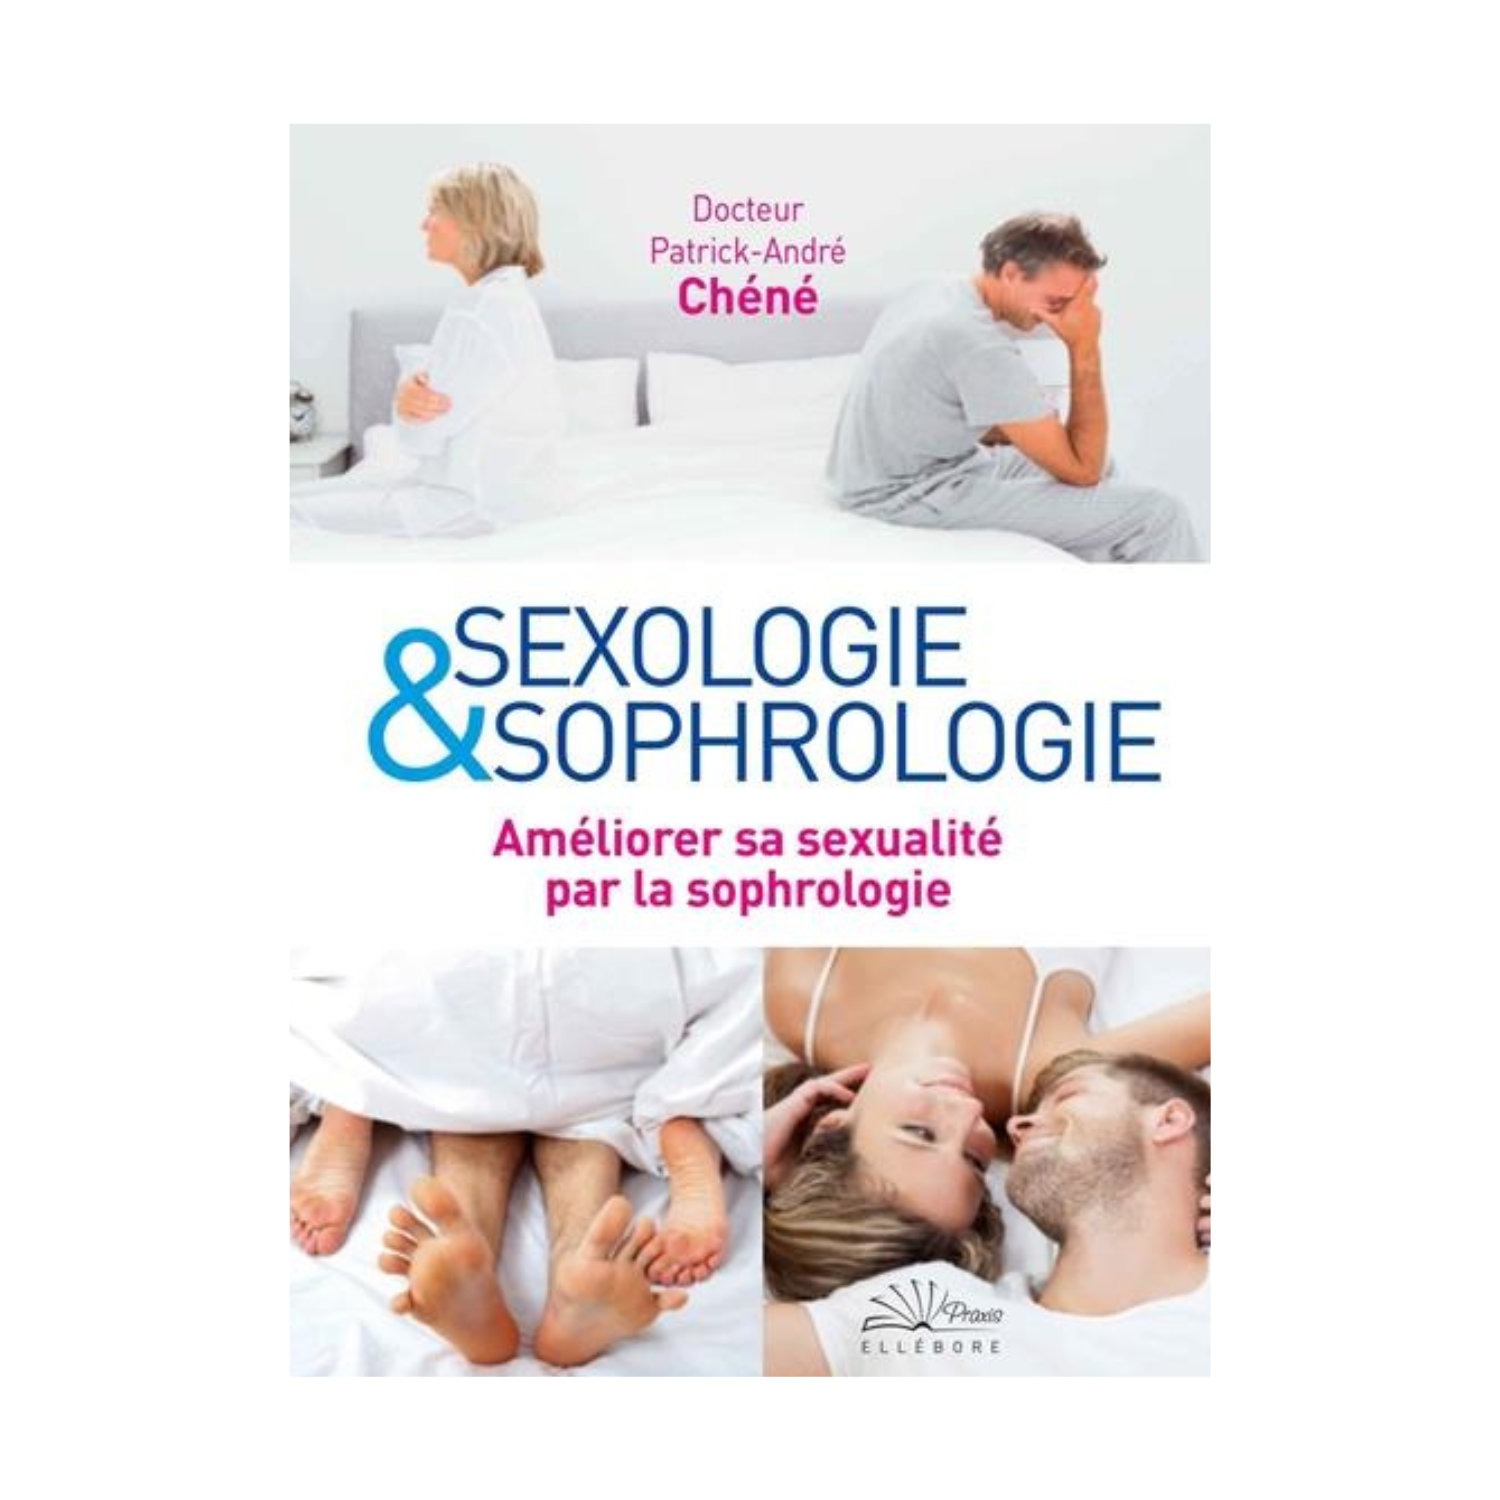 Sexologie & Sophrologie